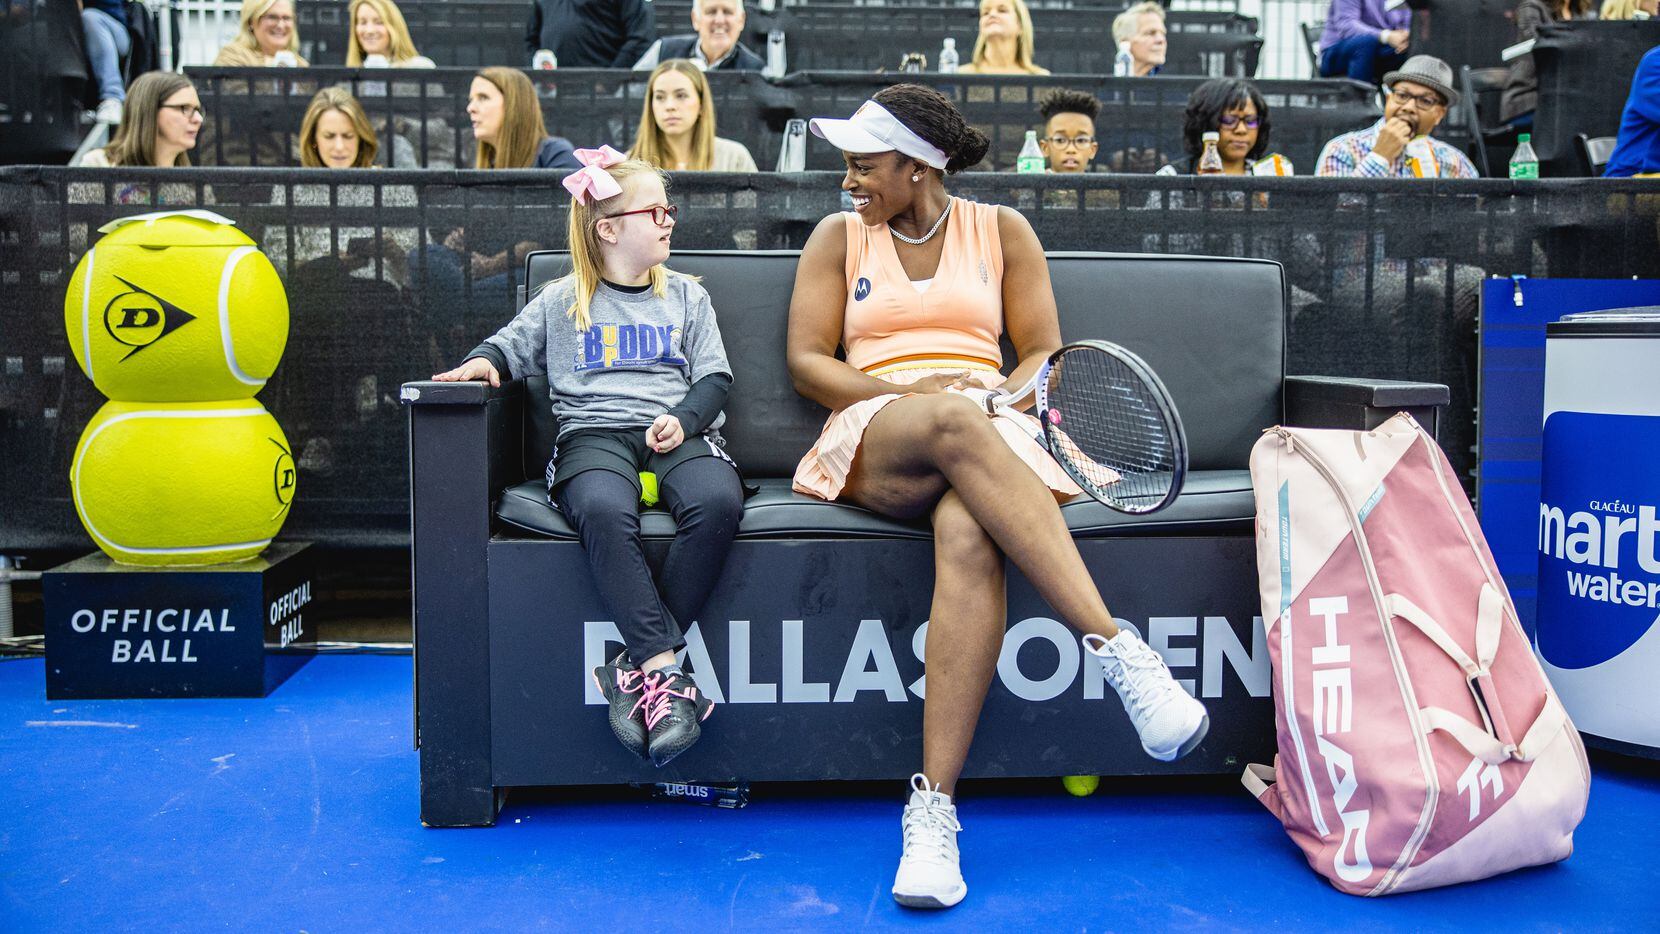 Women's tennis player Sloane Stephens met 10-year-old Sloane Stephens of North Texas, who...